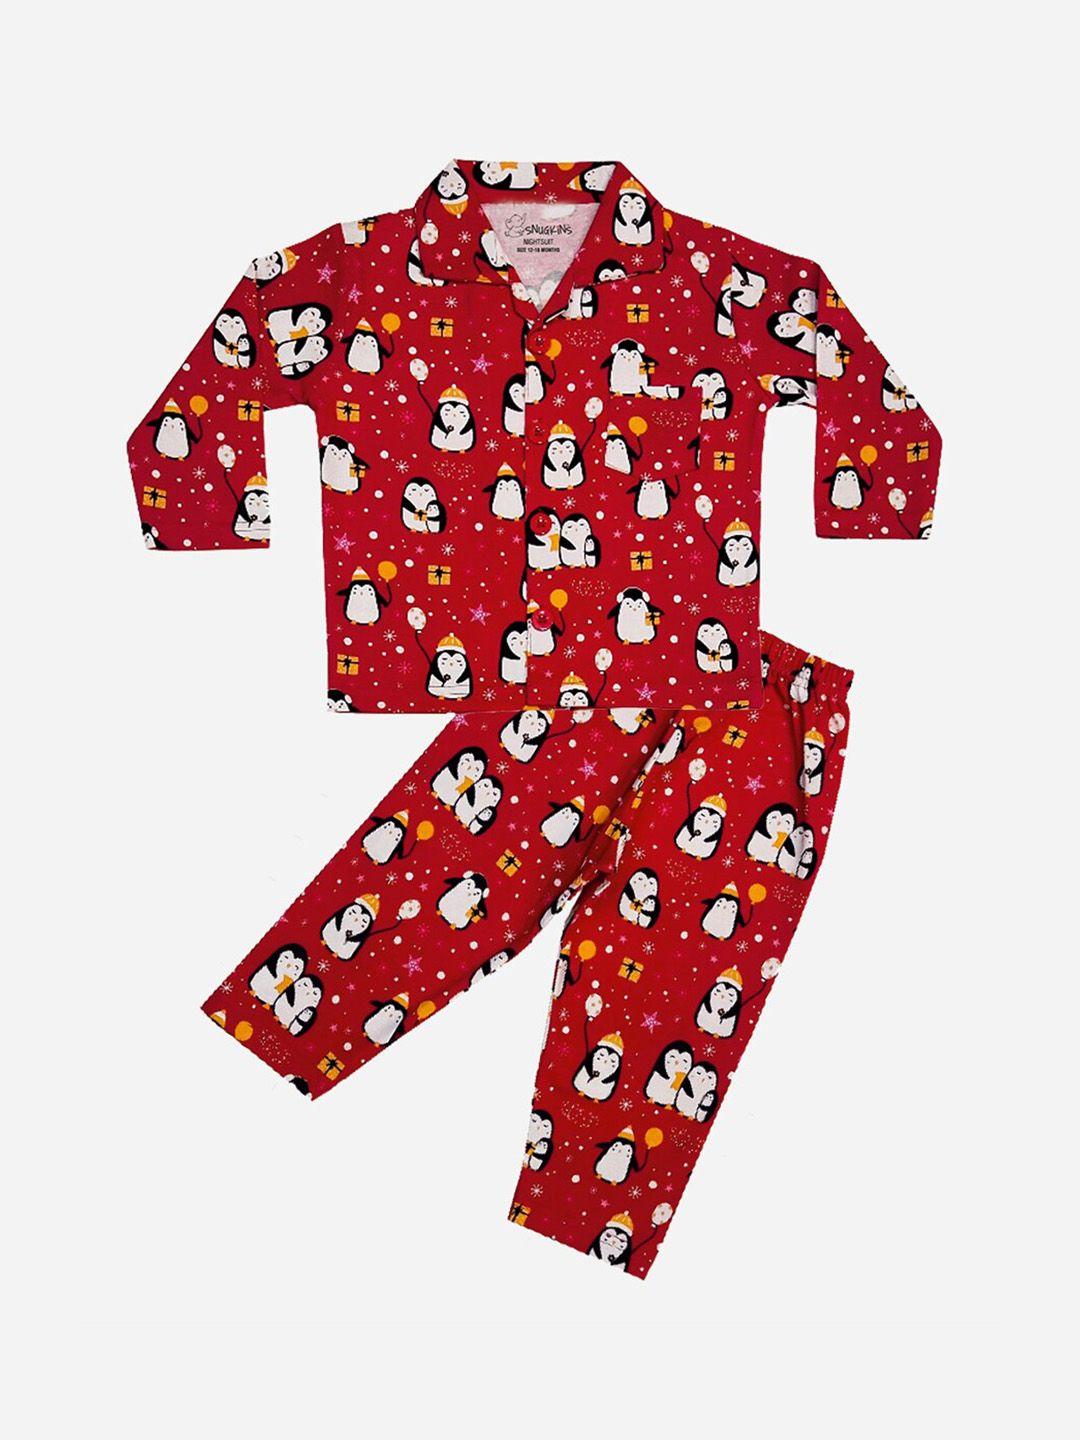 snugkins kids graphic printed pure cotton shirt with pyjamas